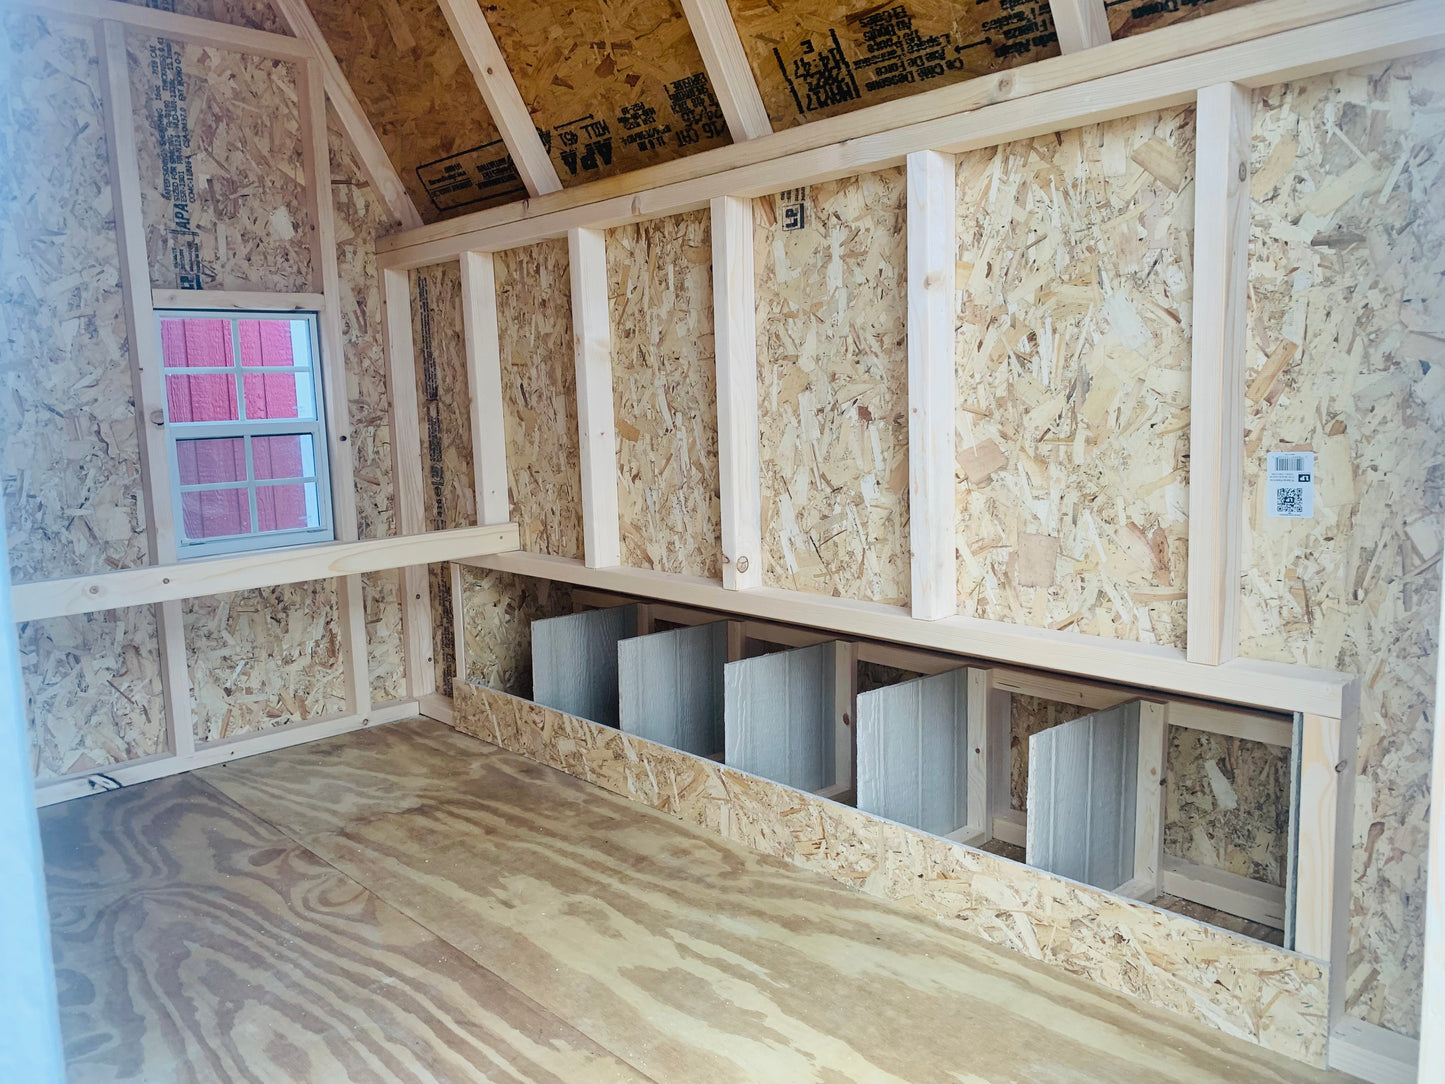 6x8 Barn Coop Inside Nesting Box